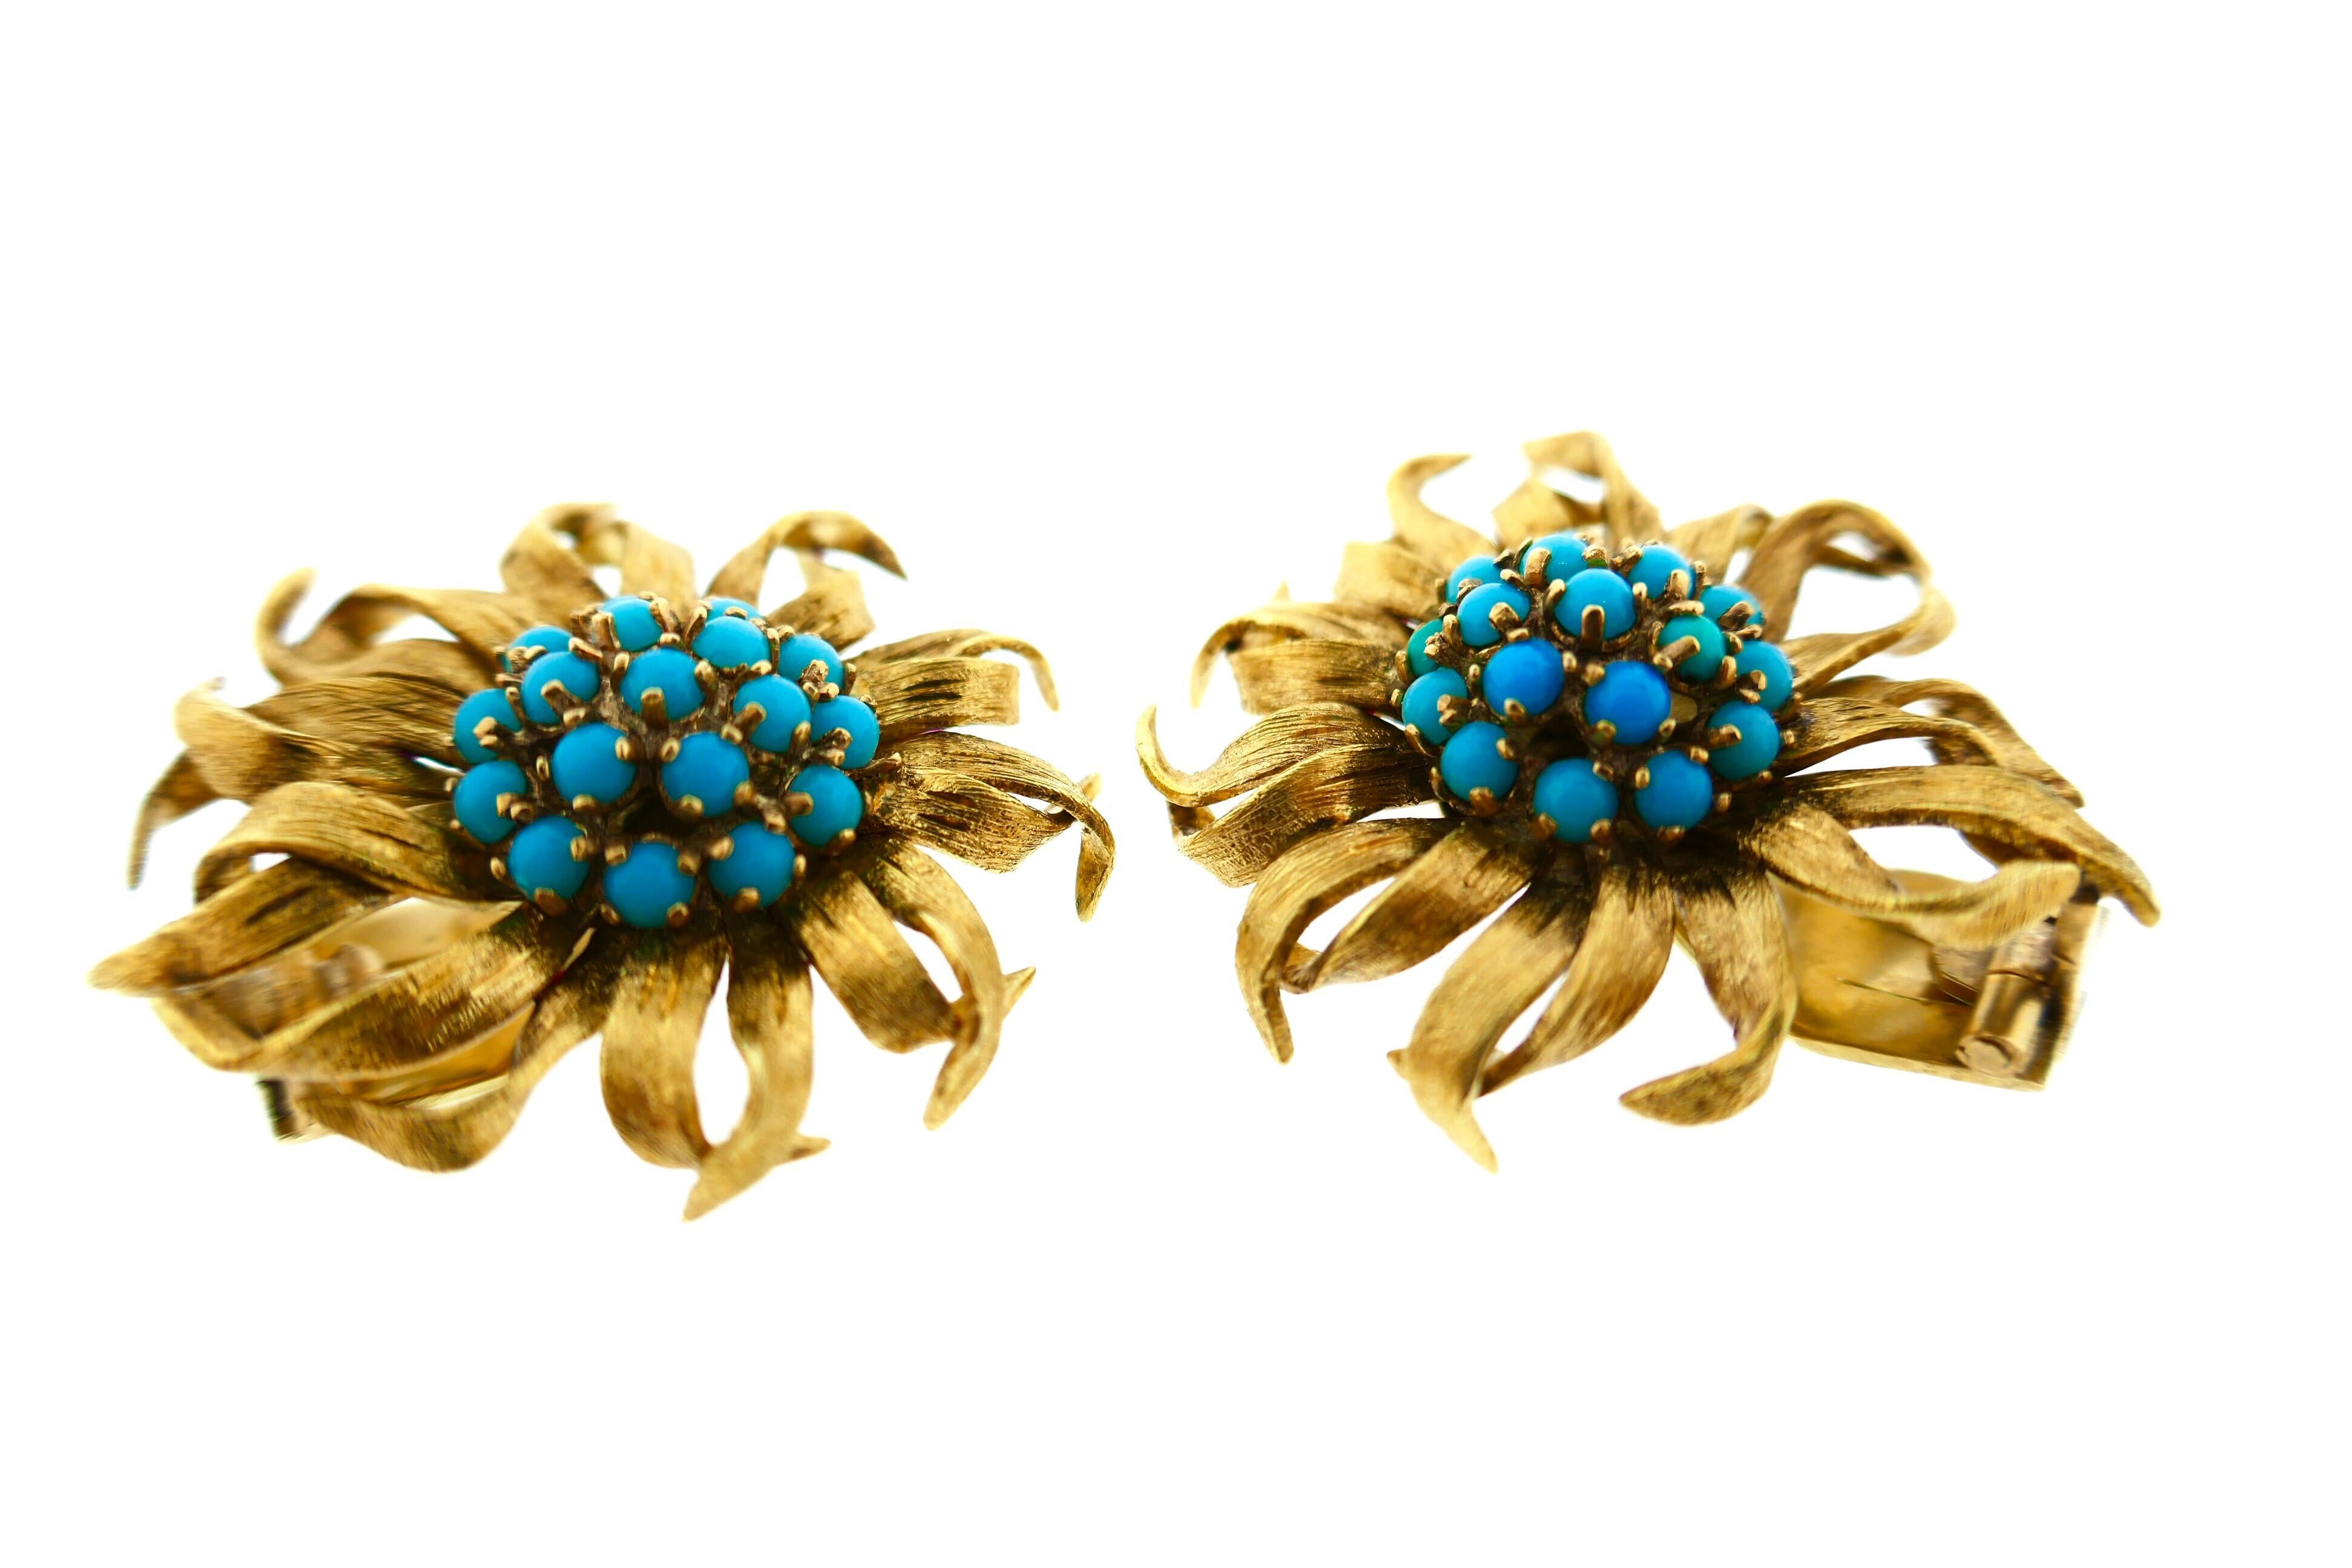 Cartier Paris 18 Karat Yellow Gold Turquoise Flower Brooch and Earrings Set 4